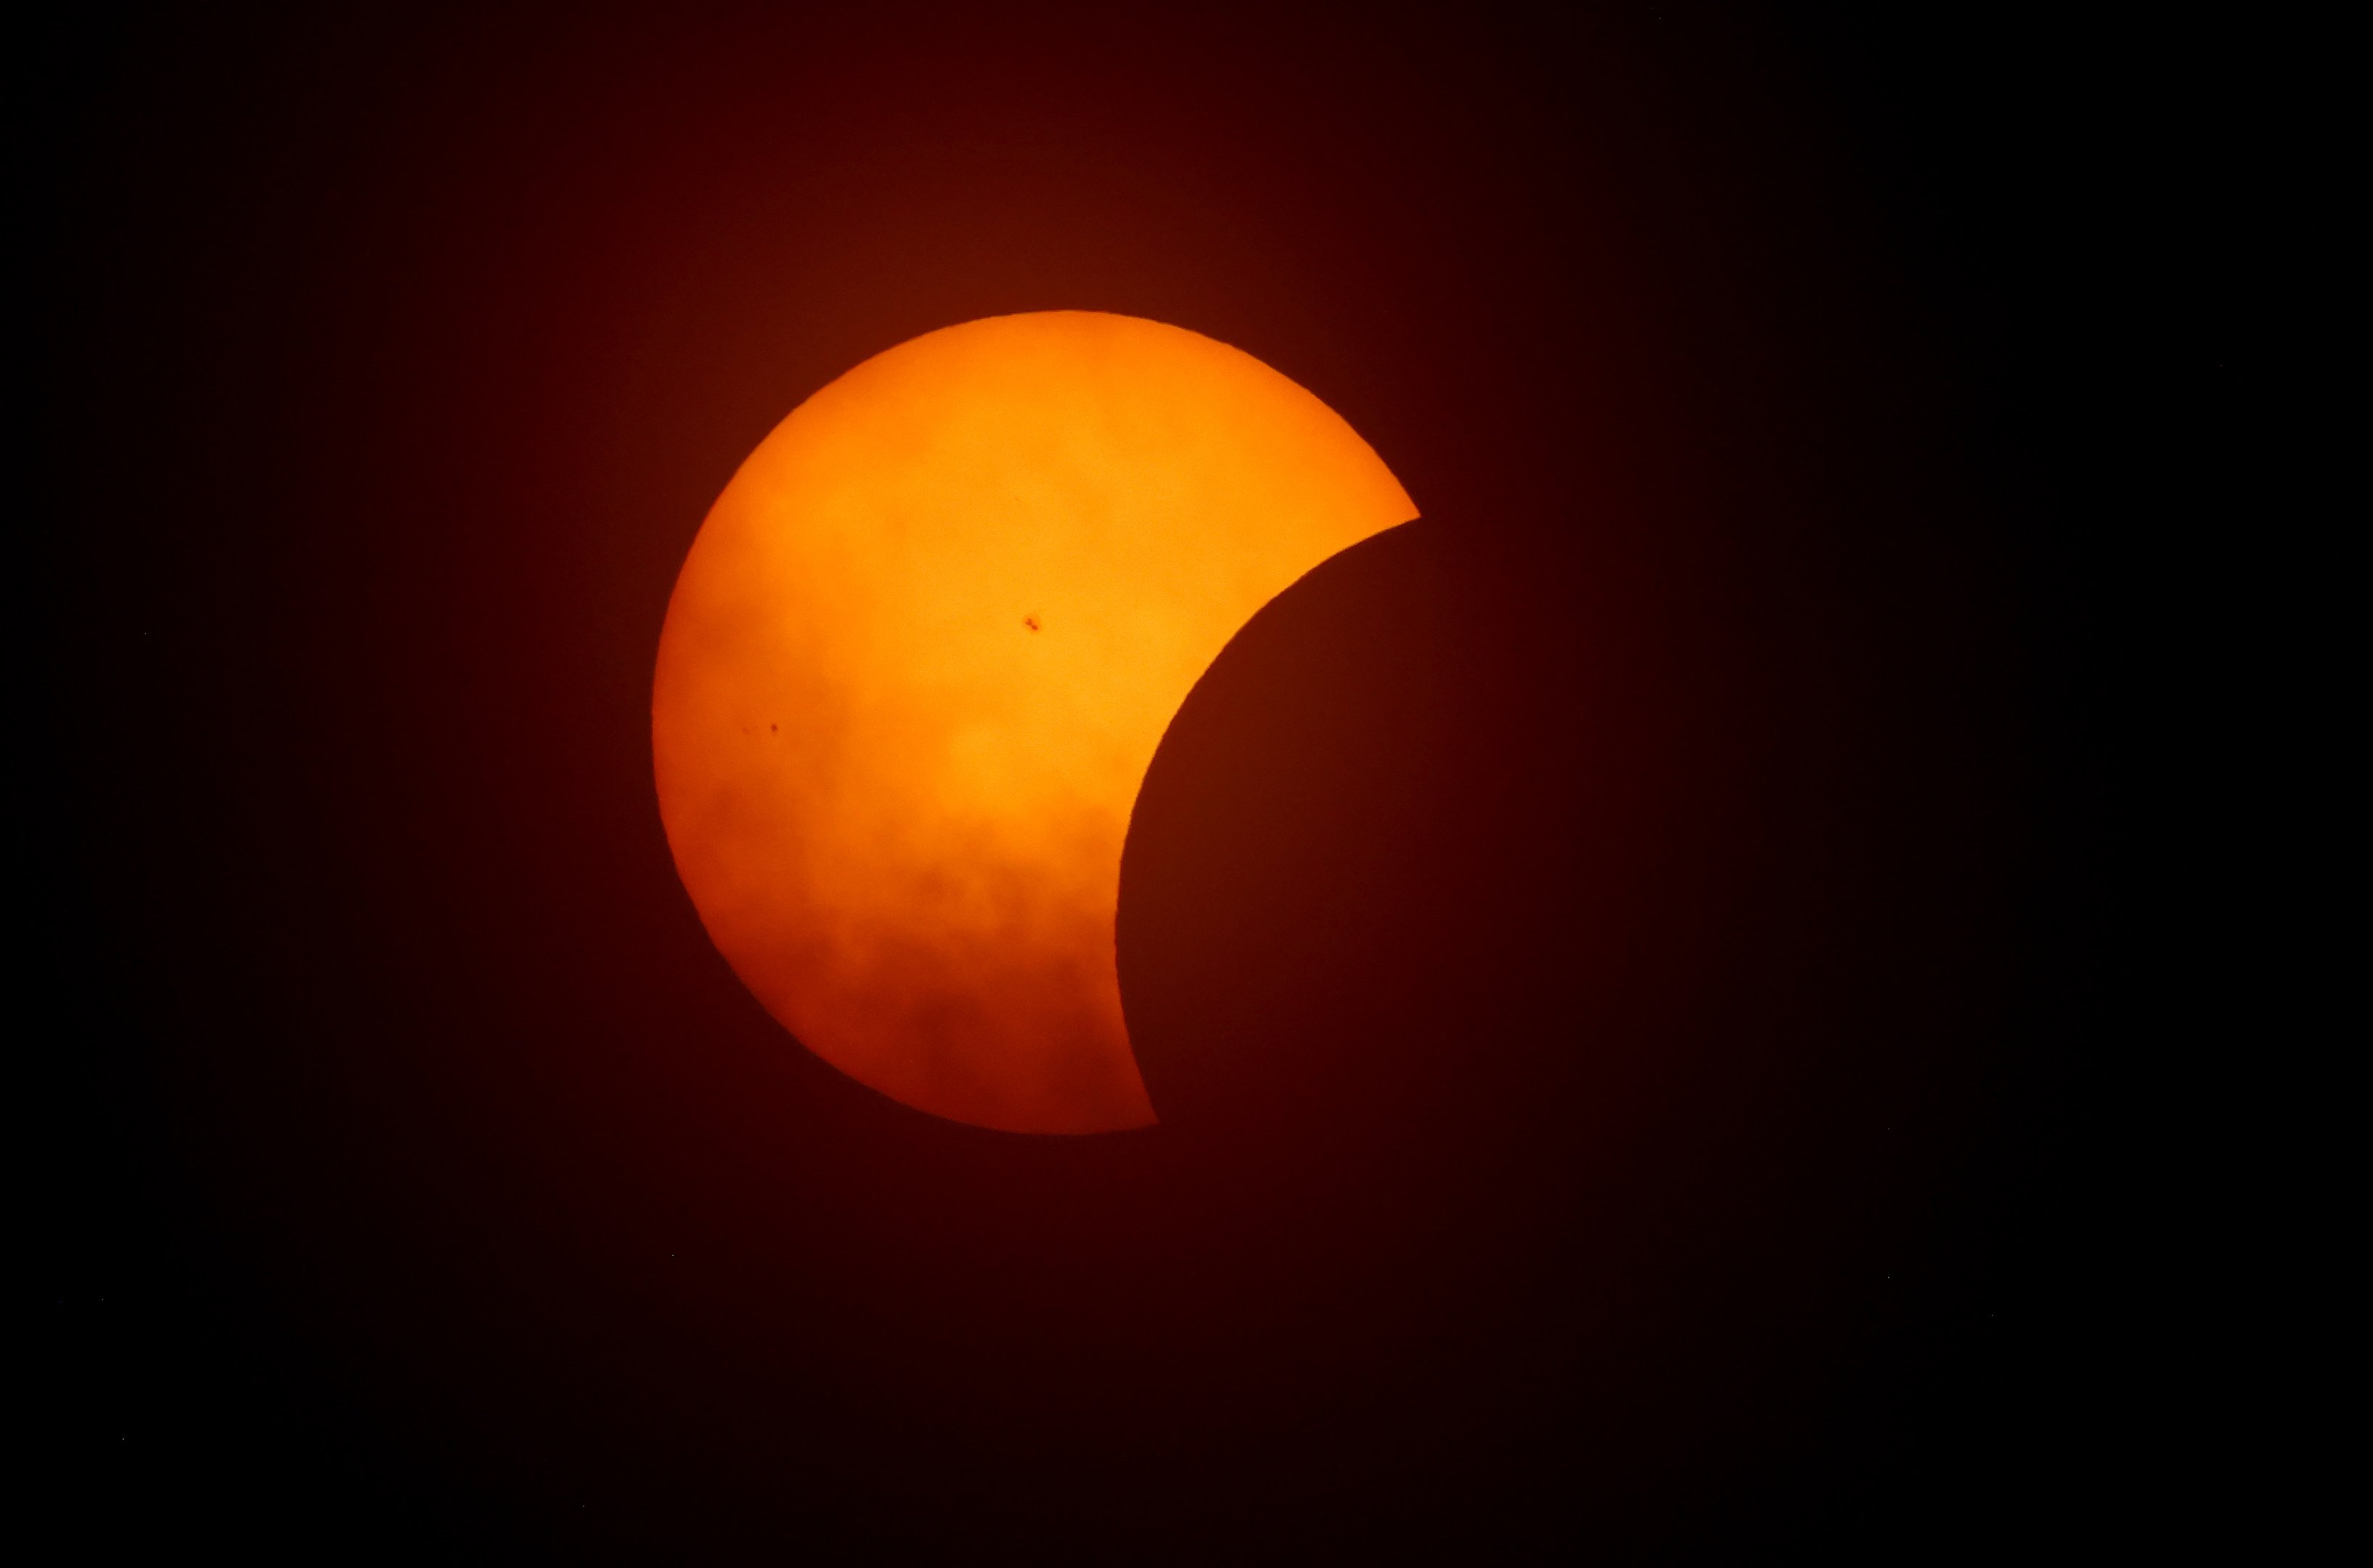 Eclipse solar: sol encoberto pela lua em Forth Worth, Dallas, nesta segunda, 8 de abril 